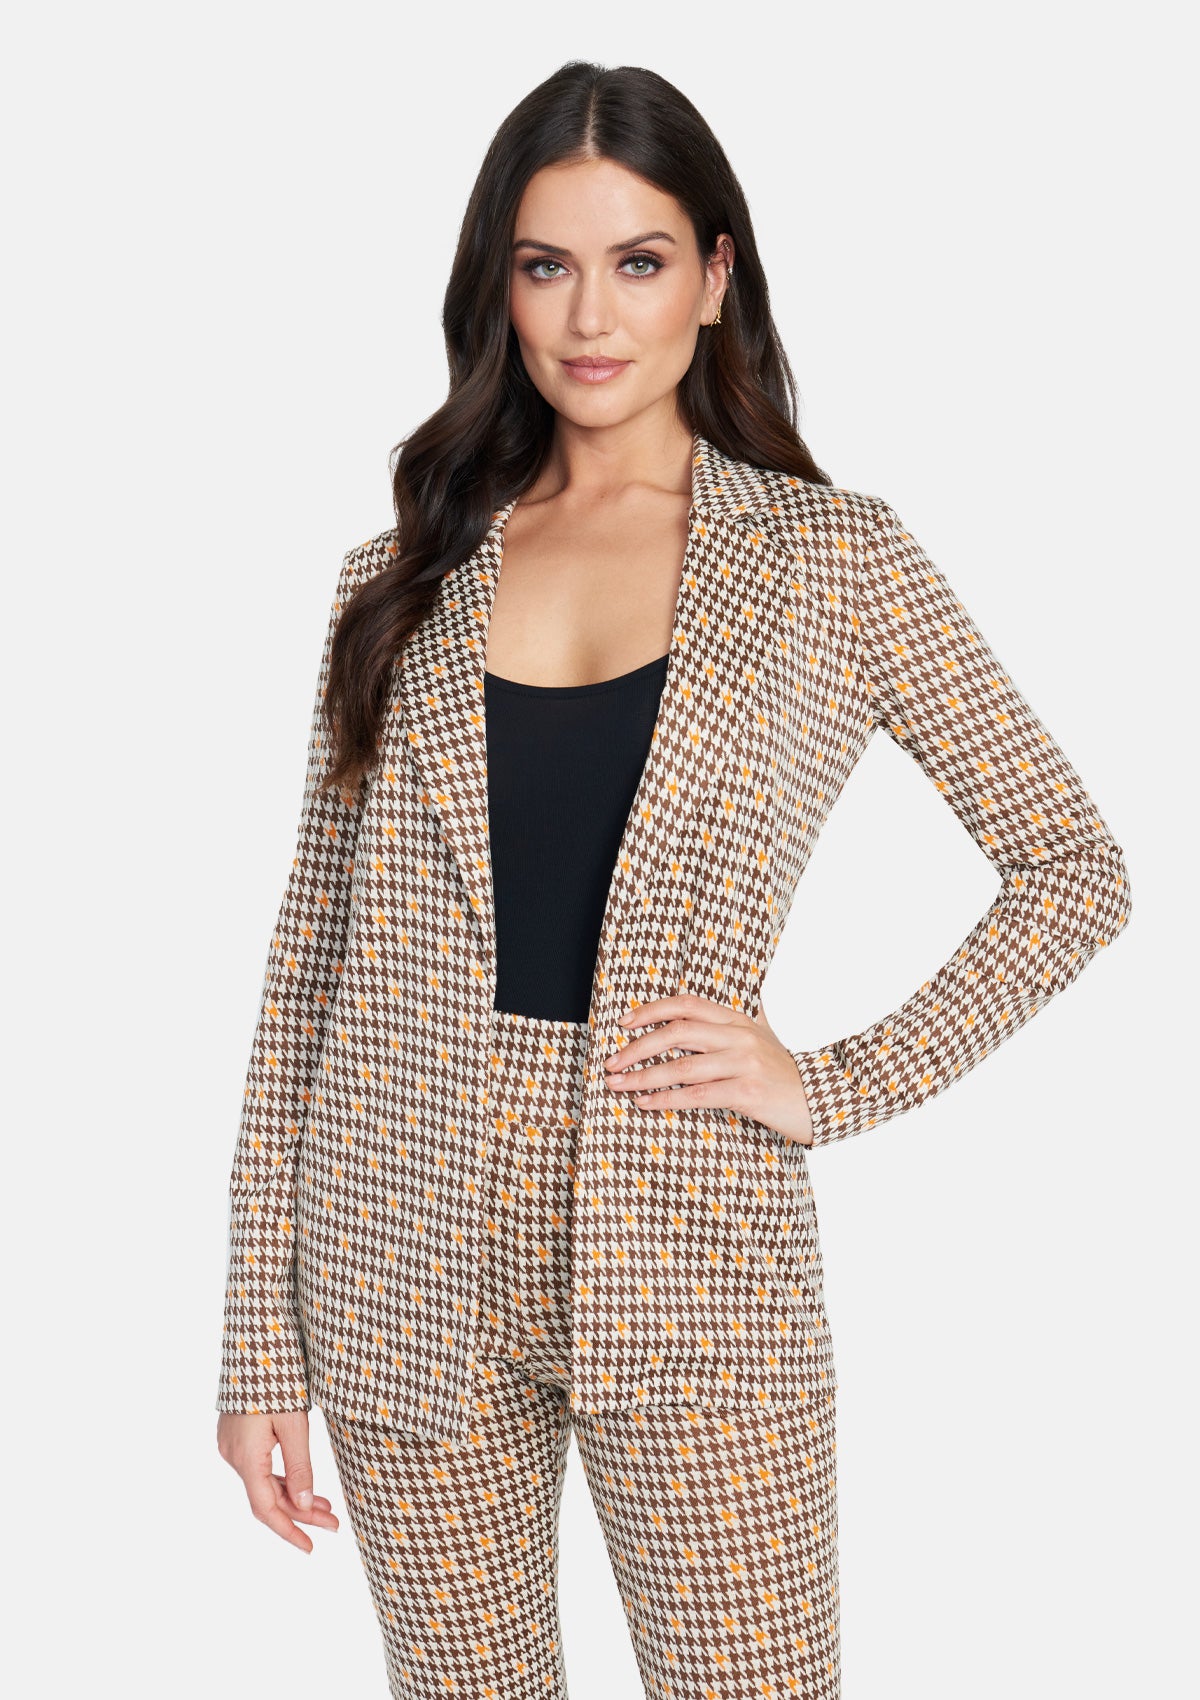 Alloy Apparel Tall Sasha Printed Blazer for Women in Brown/Orange Size S | Polyester